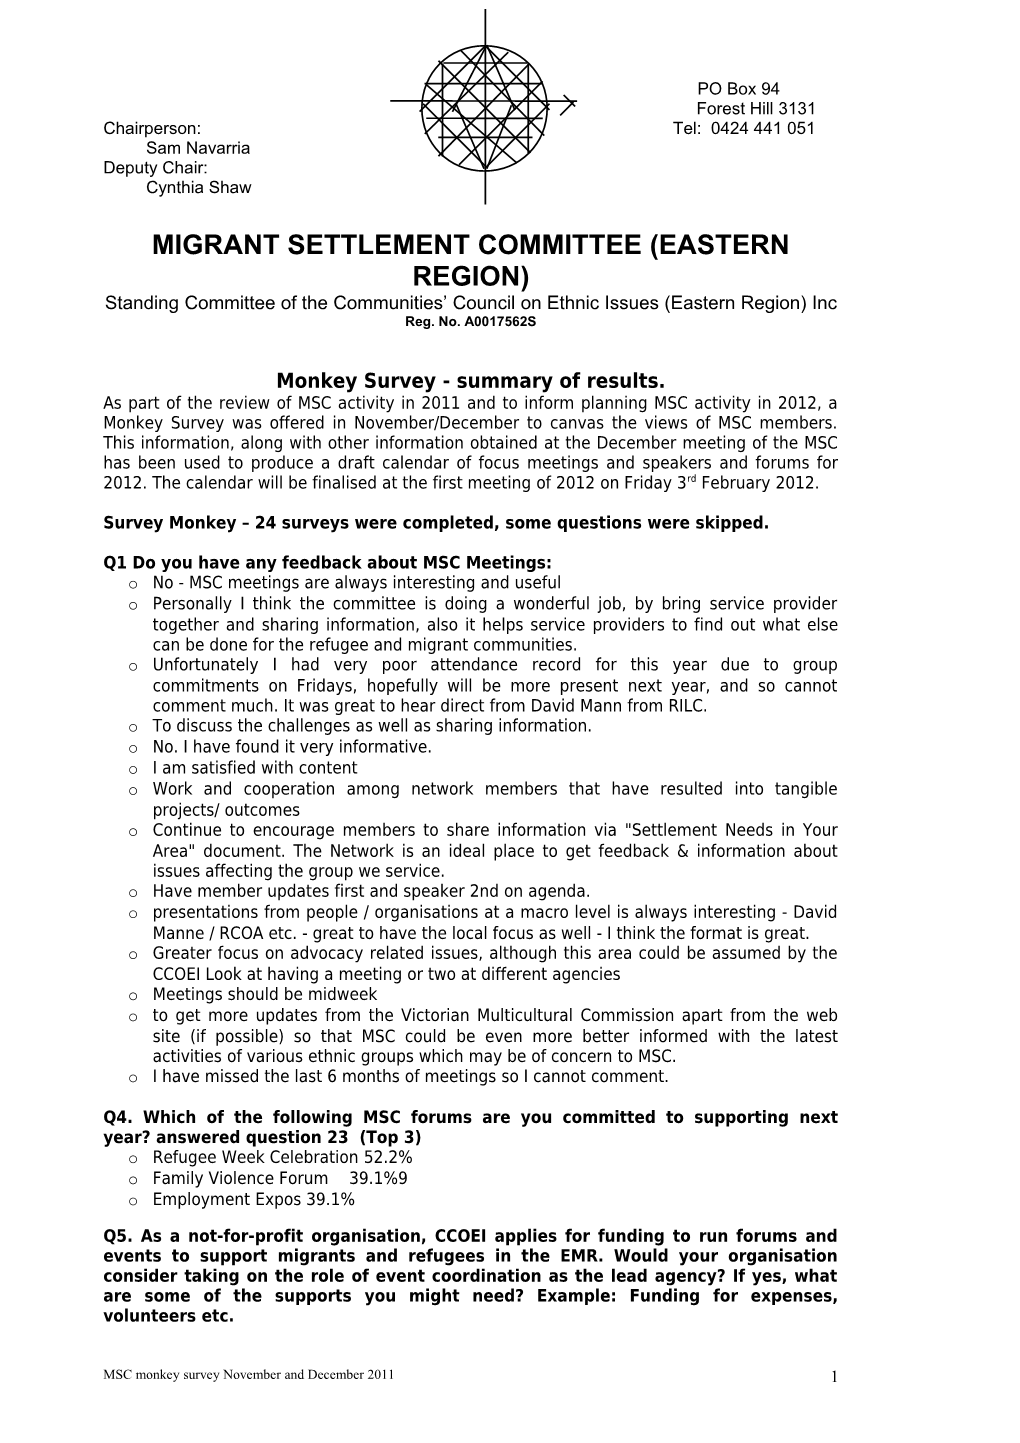 Migrant Settlement Committee (Eastern Region)